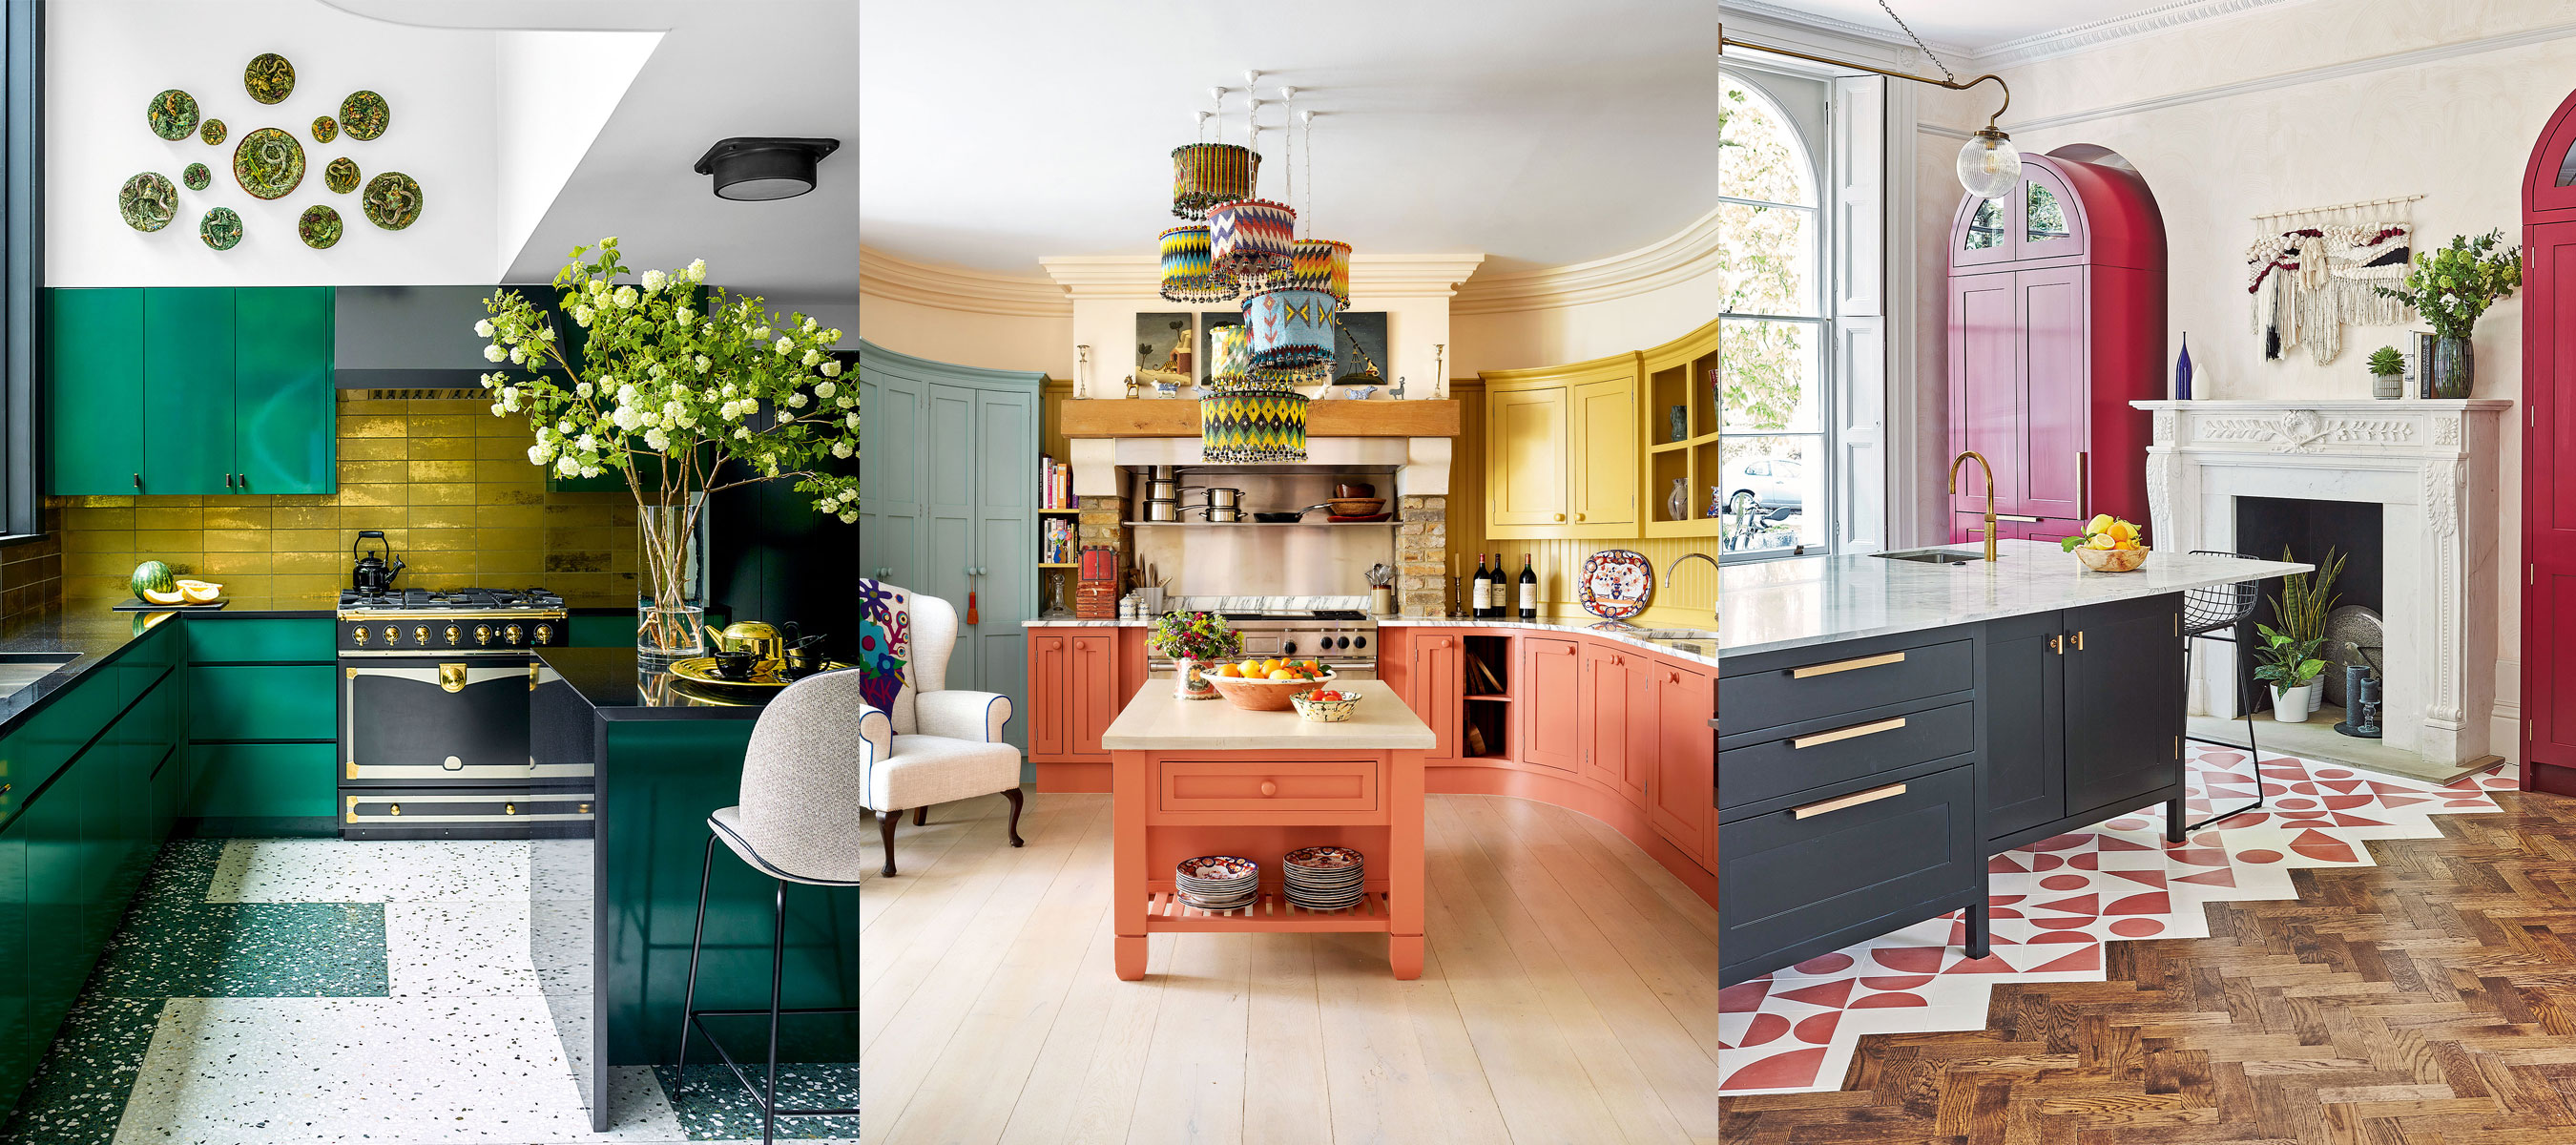 Colorful kitchen ideas – 12 design-led ways to brighten a kitchen